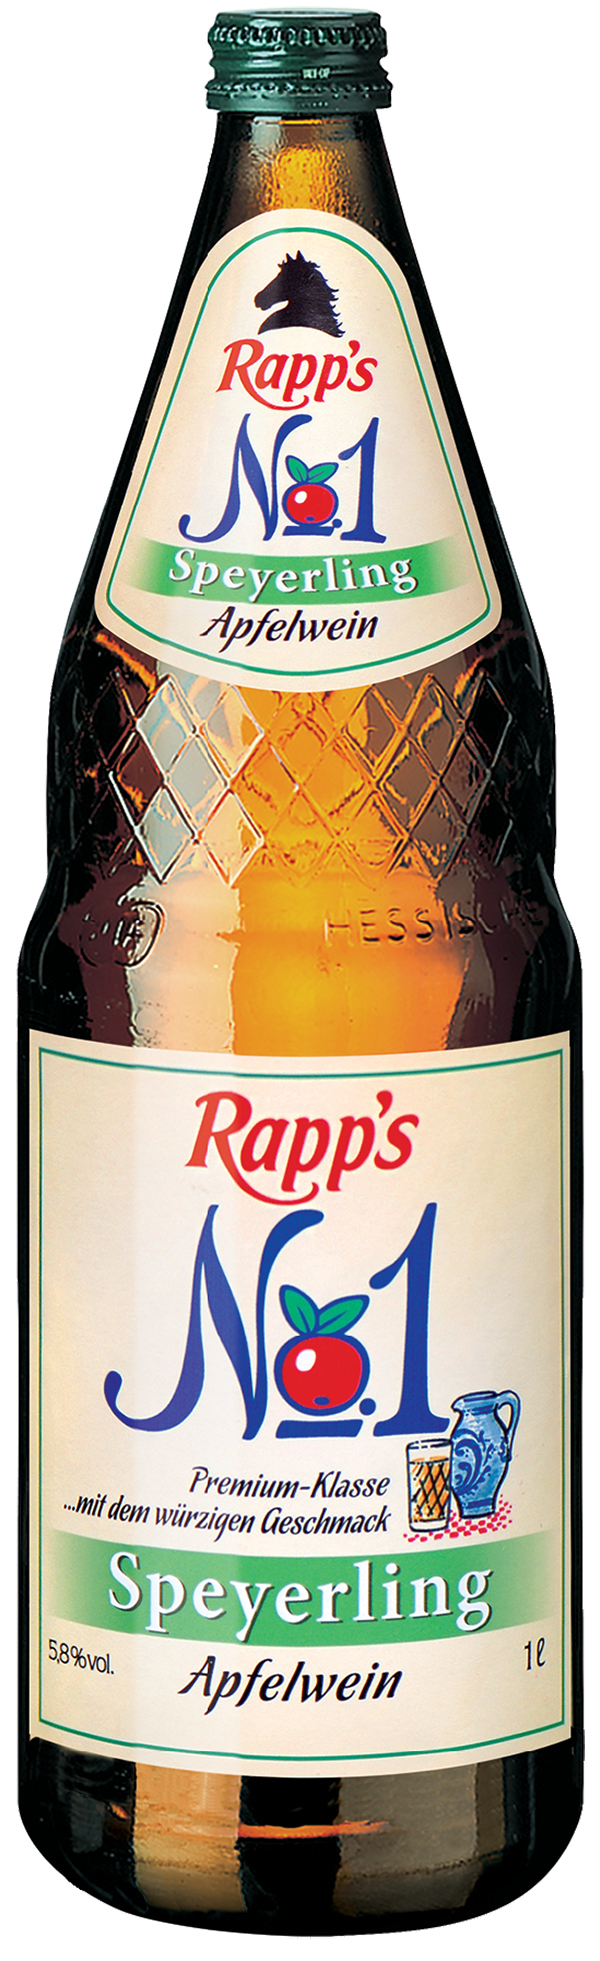 Rapps No1 Speyerling A-Wein  6 x 1,0 l (Glas)